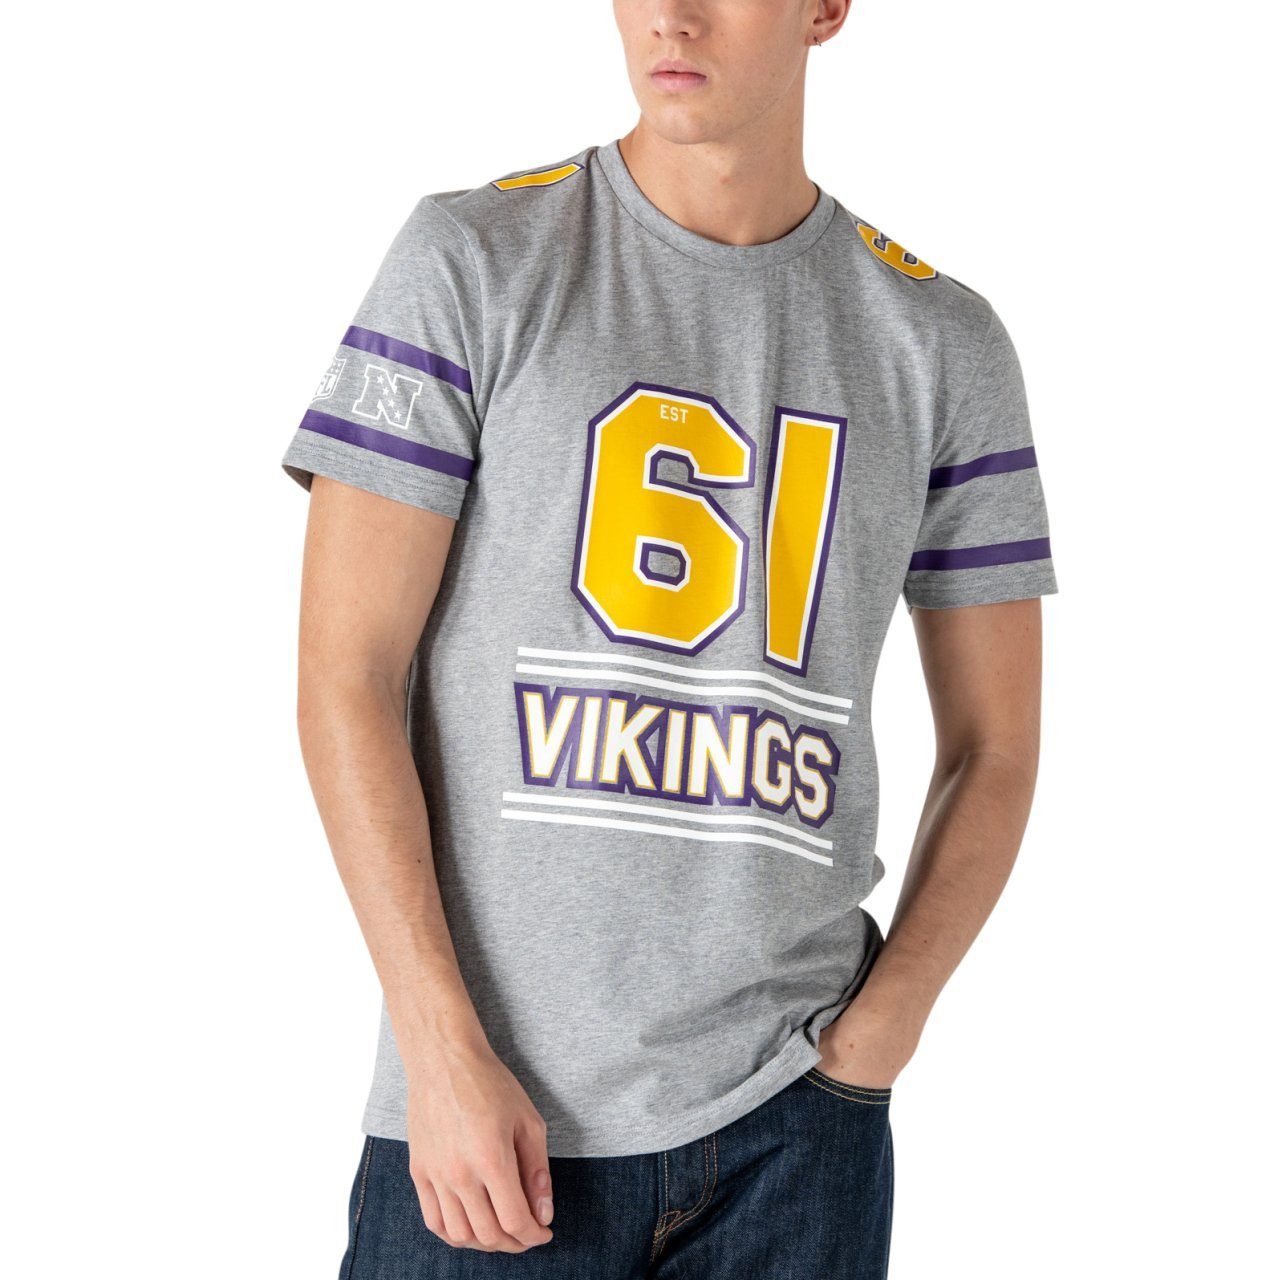 Print-Shirt Era Vikings Minnesota New ESTABLISHED